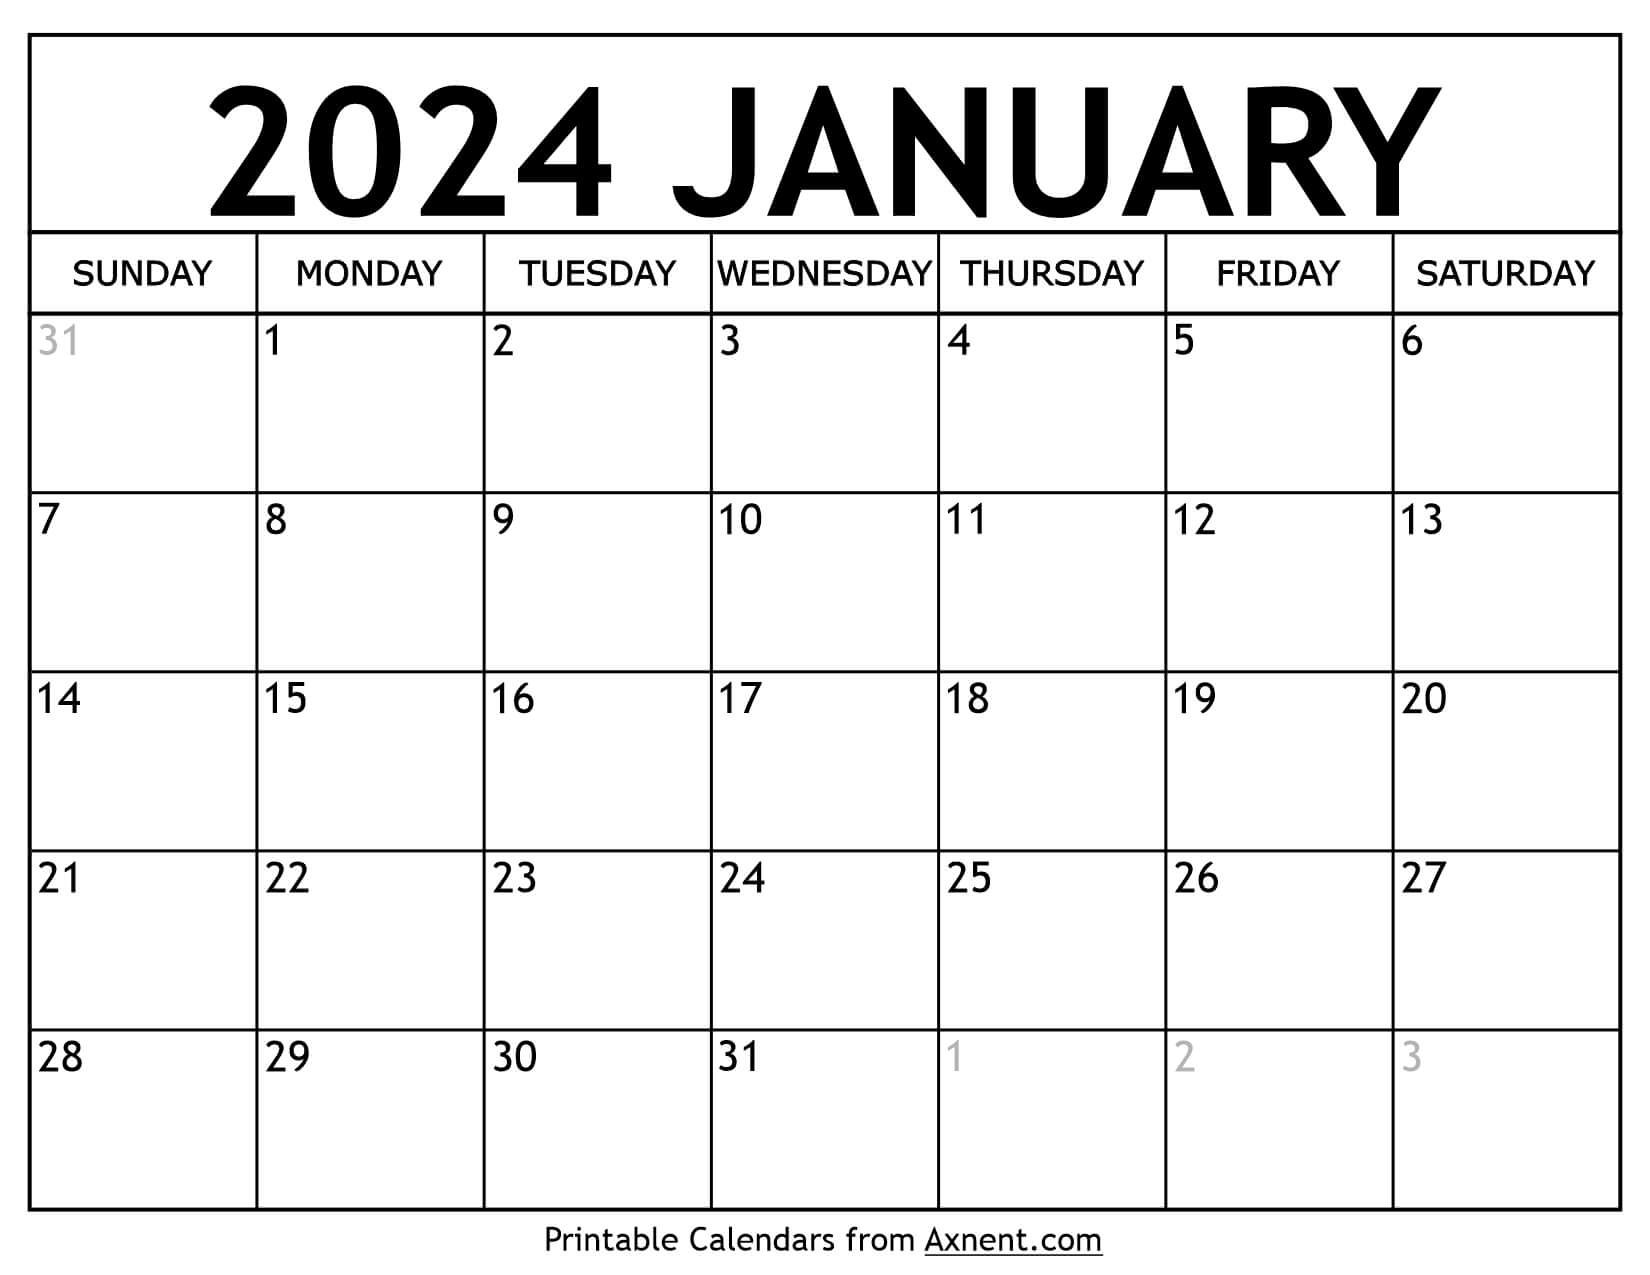 Printable January 2024 Calendar Template - Print Now for Free Printable January 2024 Monthly Calendar